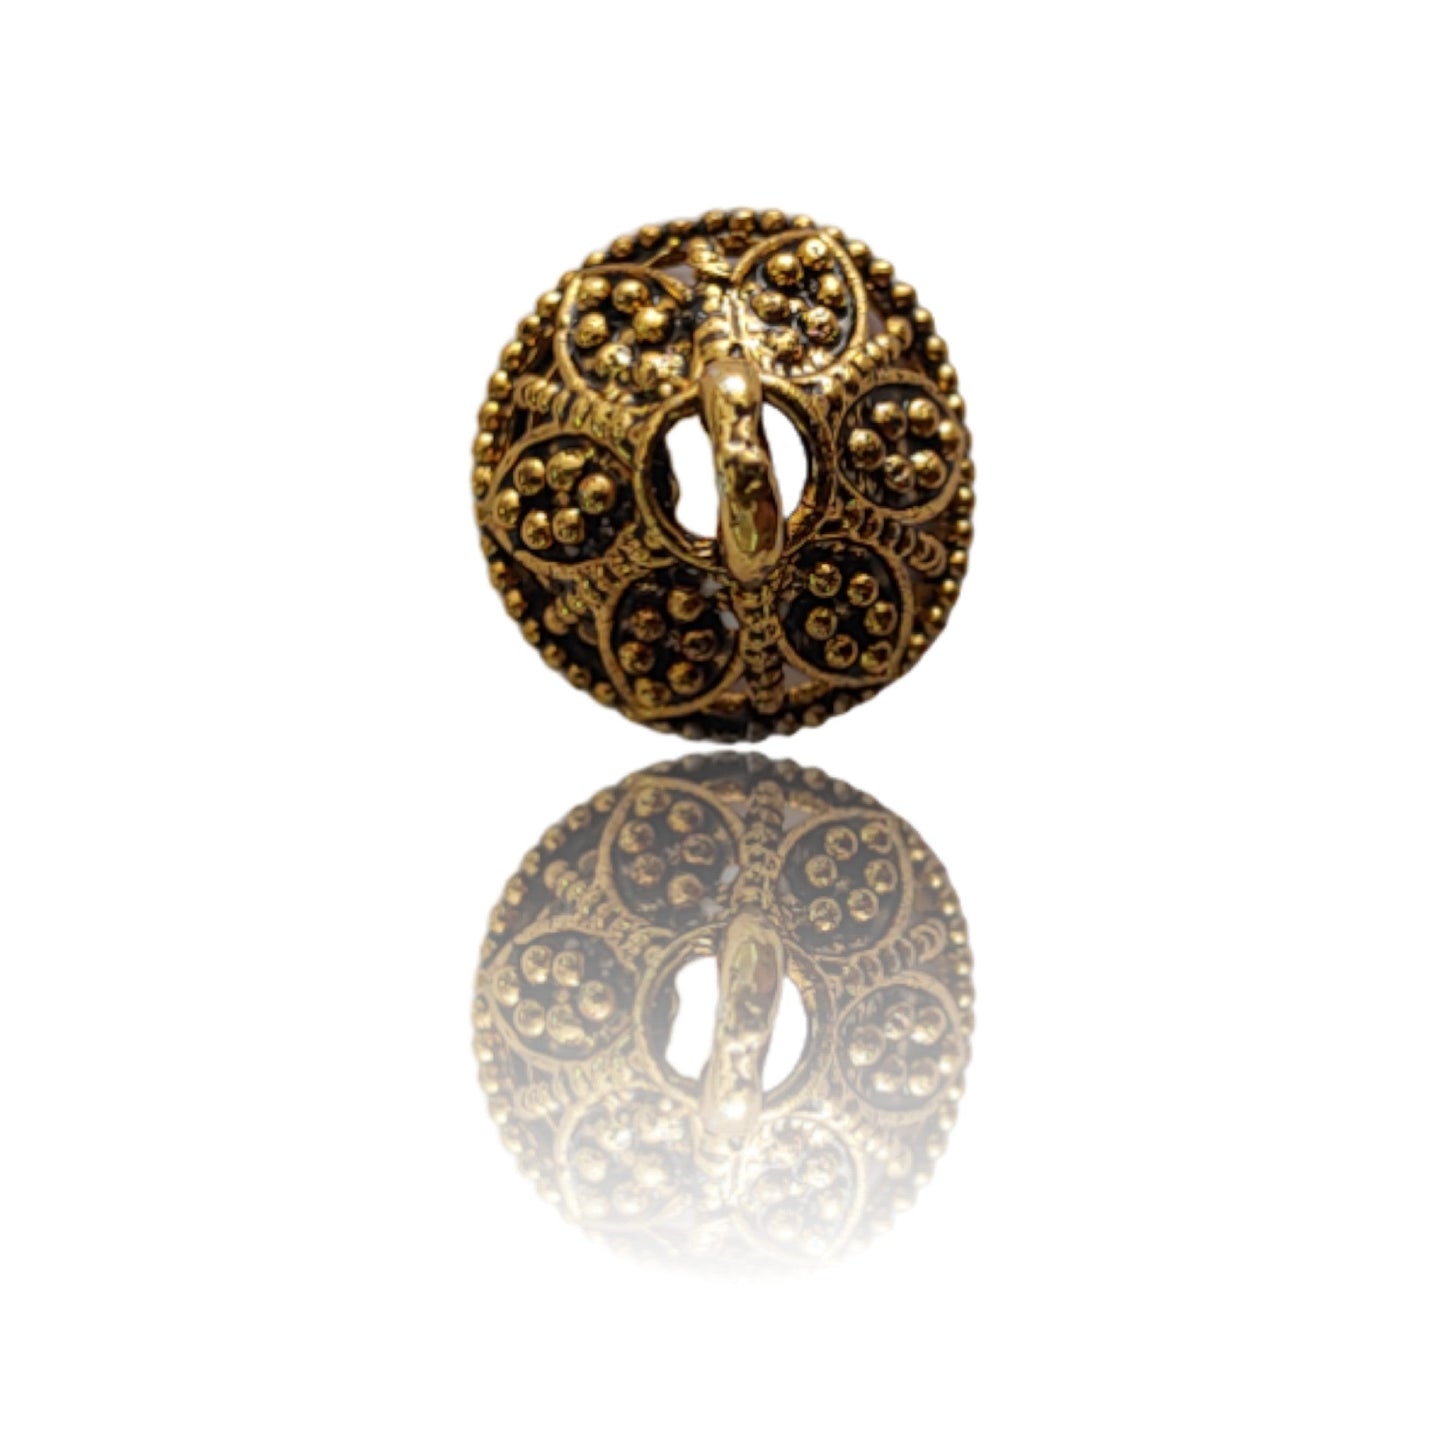 Indian Petals 100 Pcs Golden Square Cap Jhumki Metal Motif for Rakhi, Jewelry designing and Craft Making or Décor